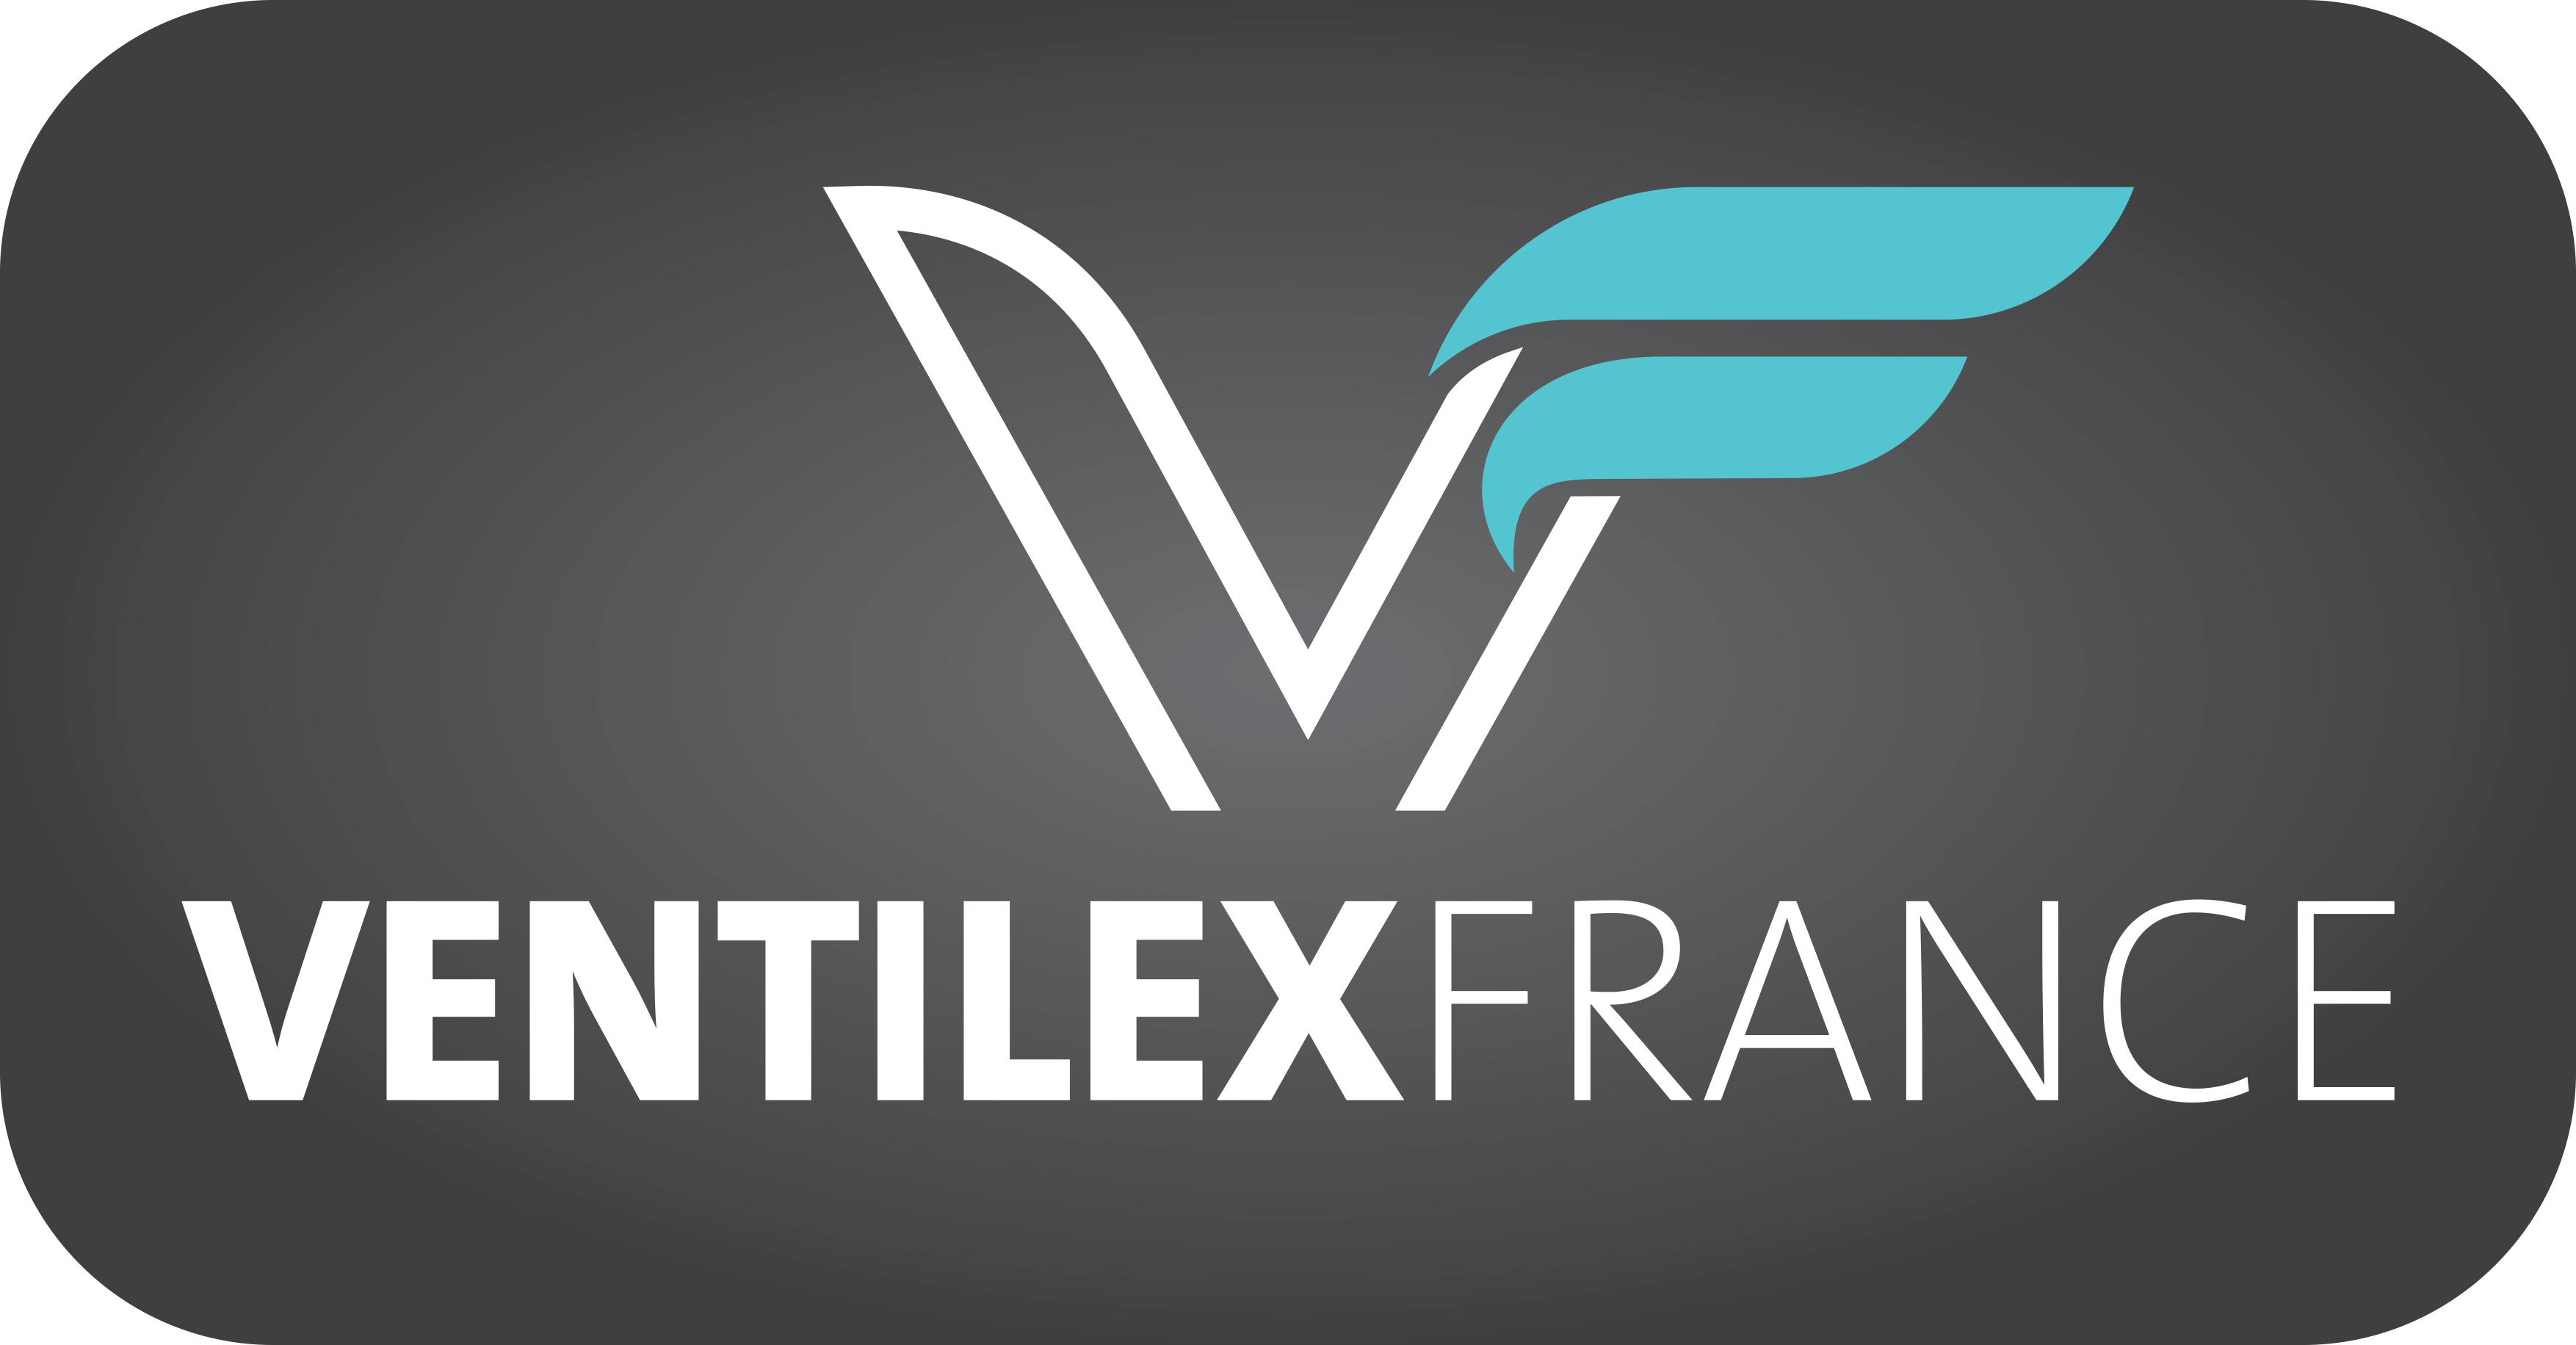 Ventilex France